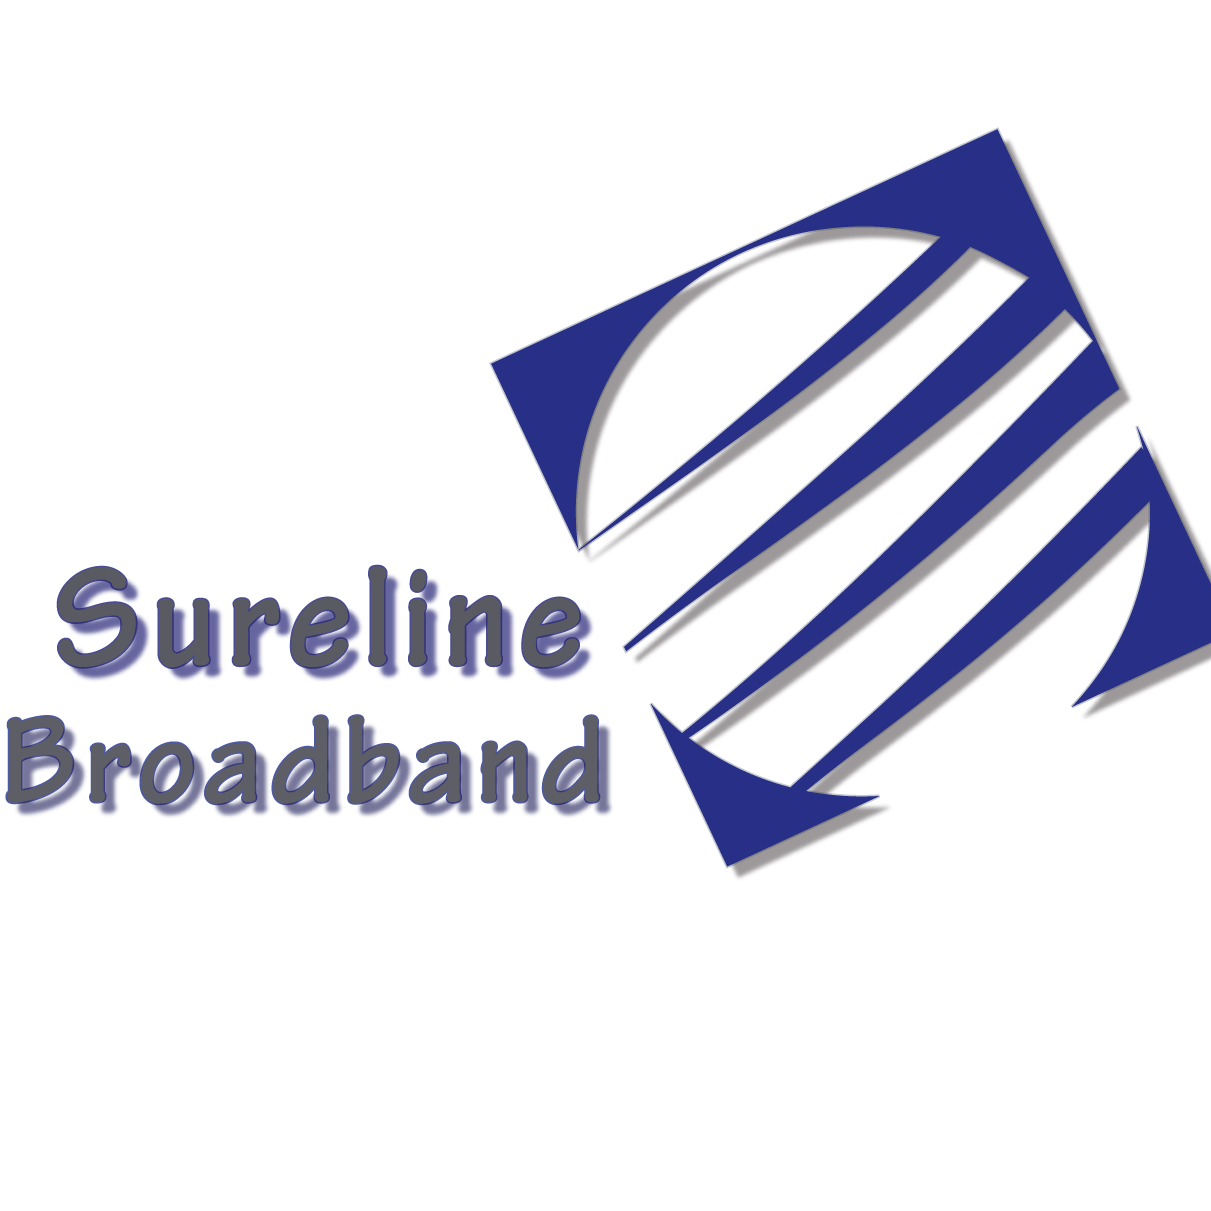 sureline broadband